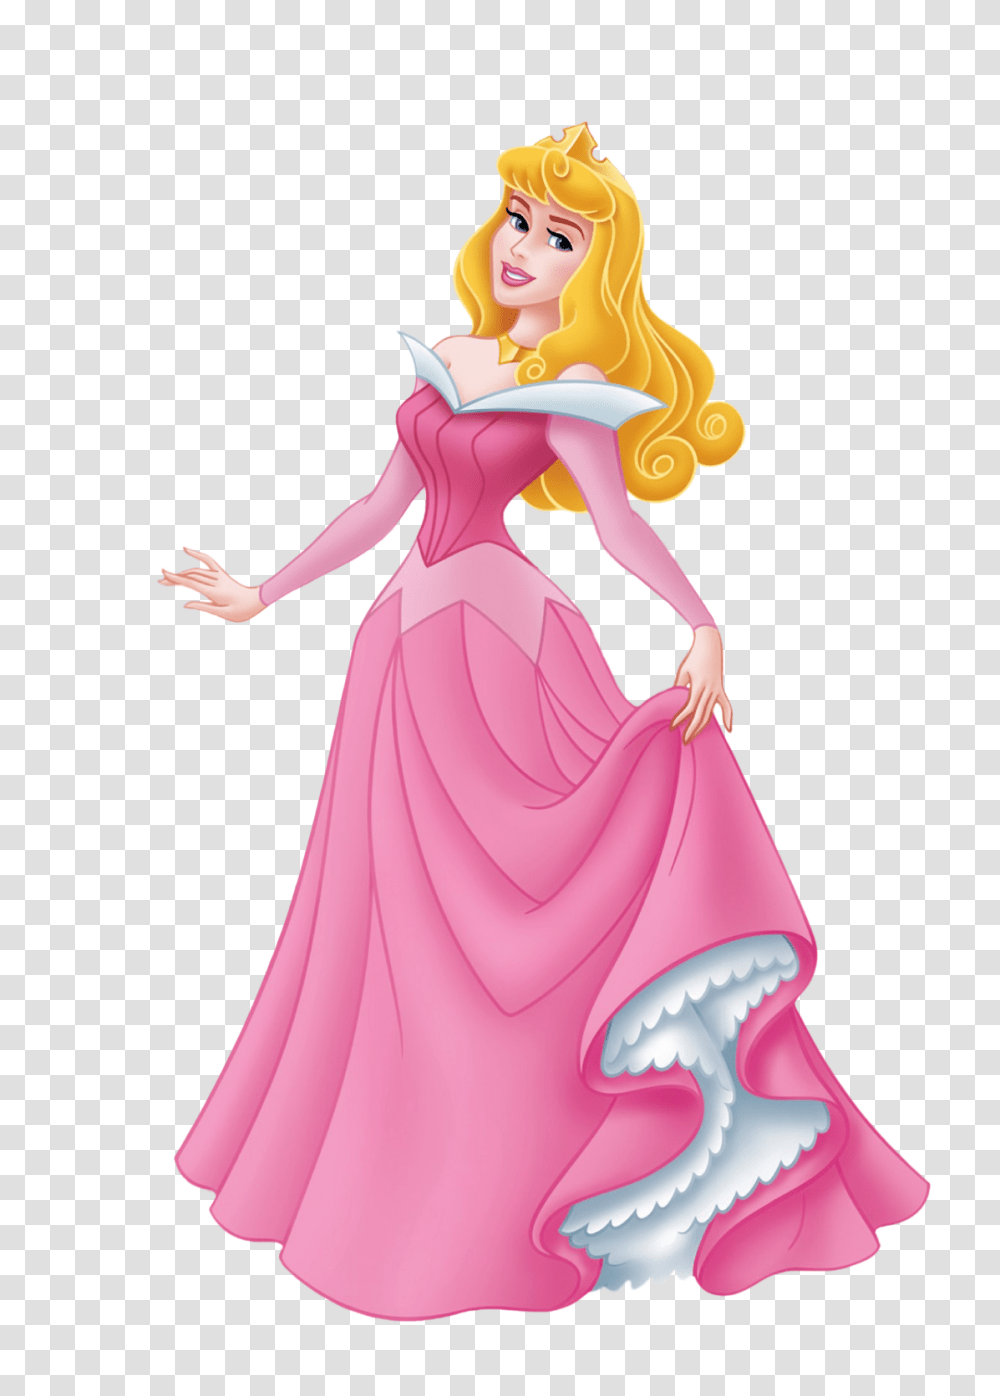 Aurora Background Princesa Peach, Clothing, Female, Person, Dance Pose Transparent Png